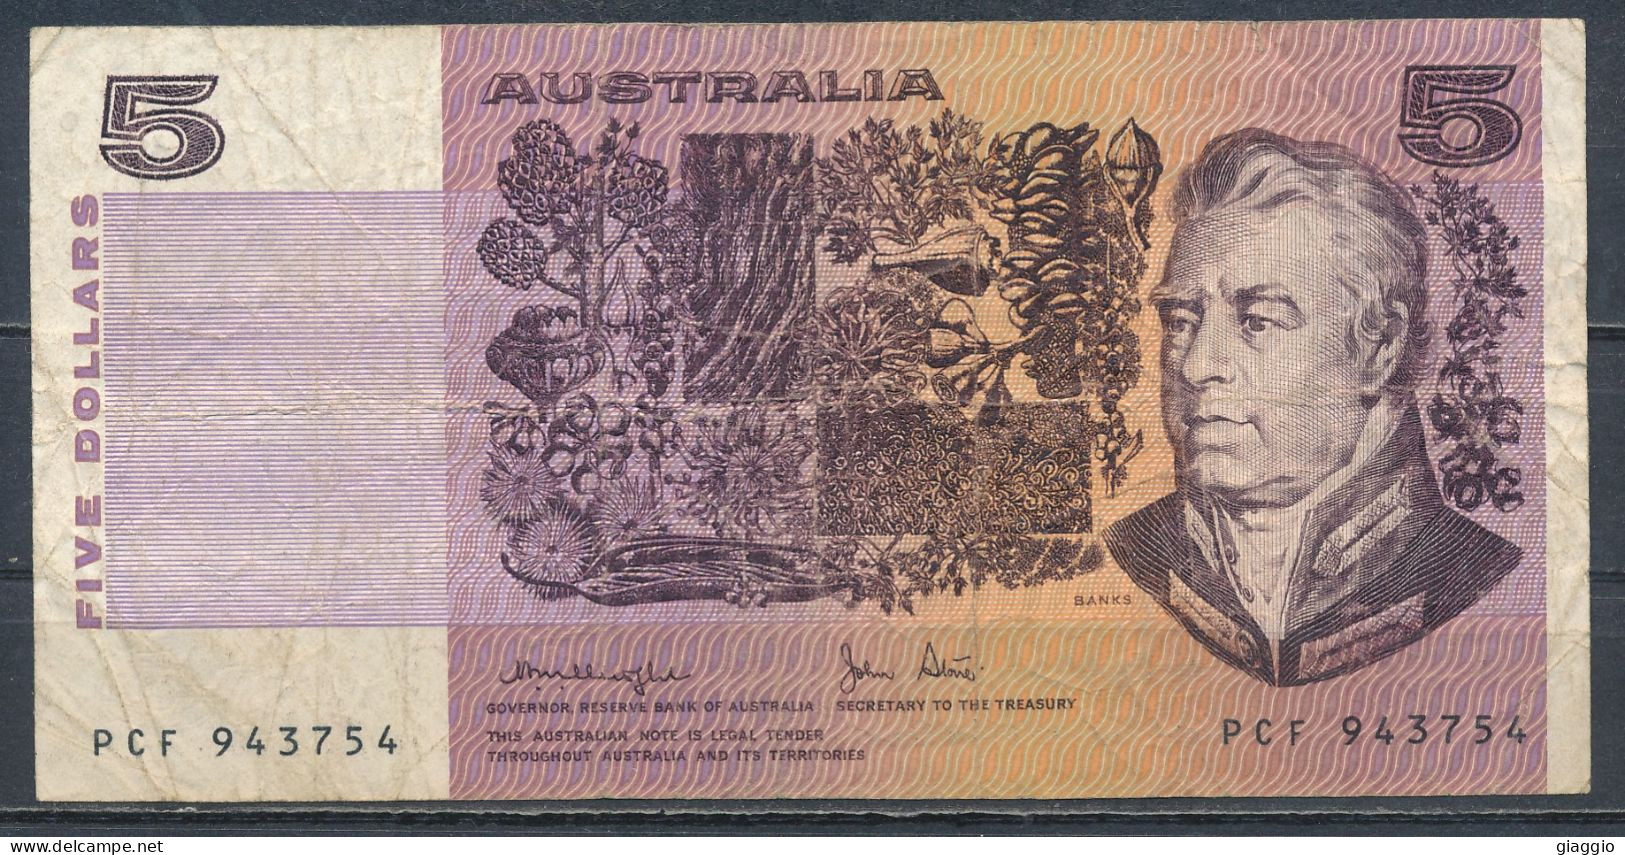 °°° AUSTRALIA 5 DOLLARS 1979 °°° - 1974-94 Australia Reserve Bank (Banknoten Aus Papier)